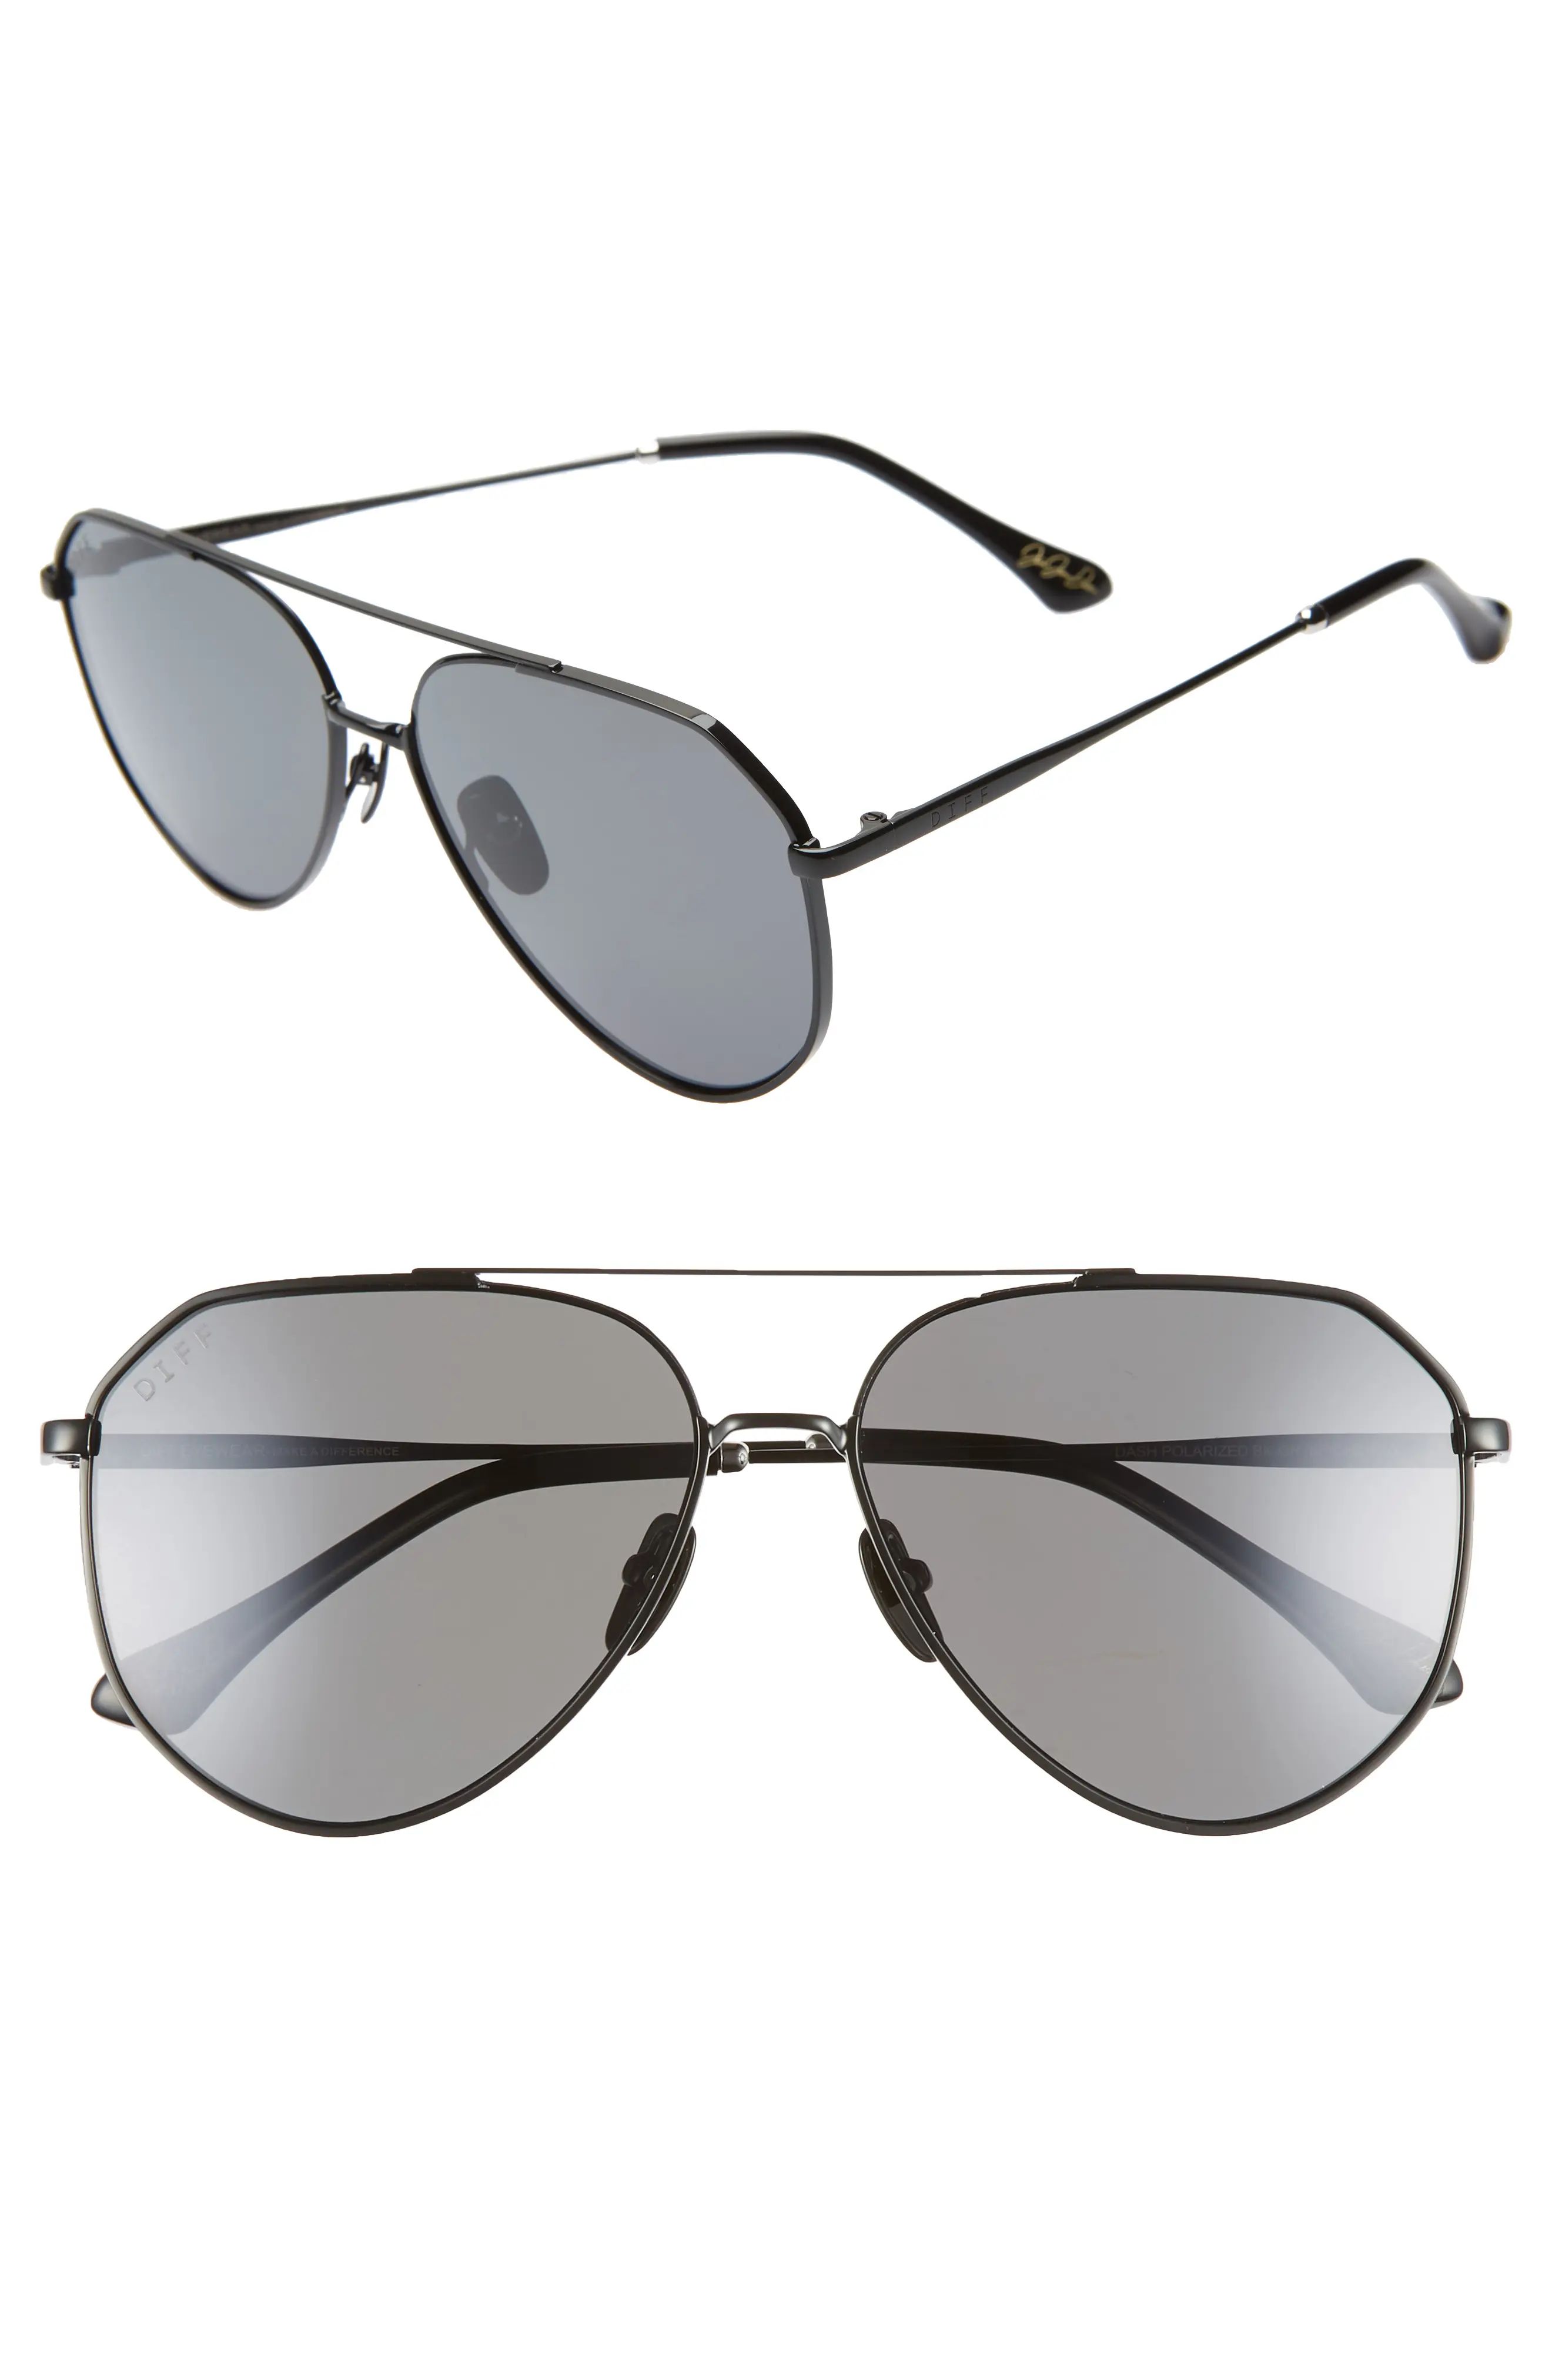 Women's Diff X Jessie James Decker Dash 61Mm Polarized Aviator Sunglasses - Polished Black | Nordstrom